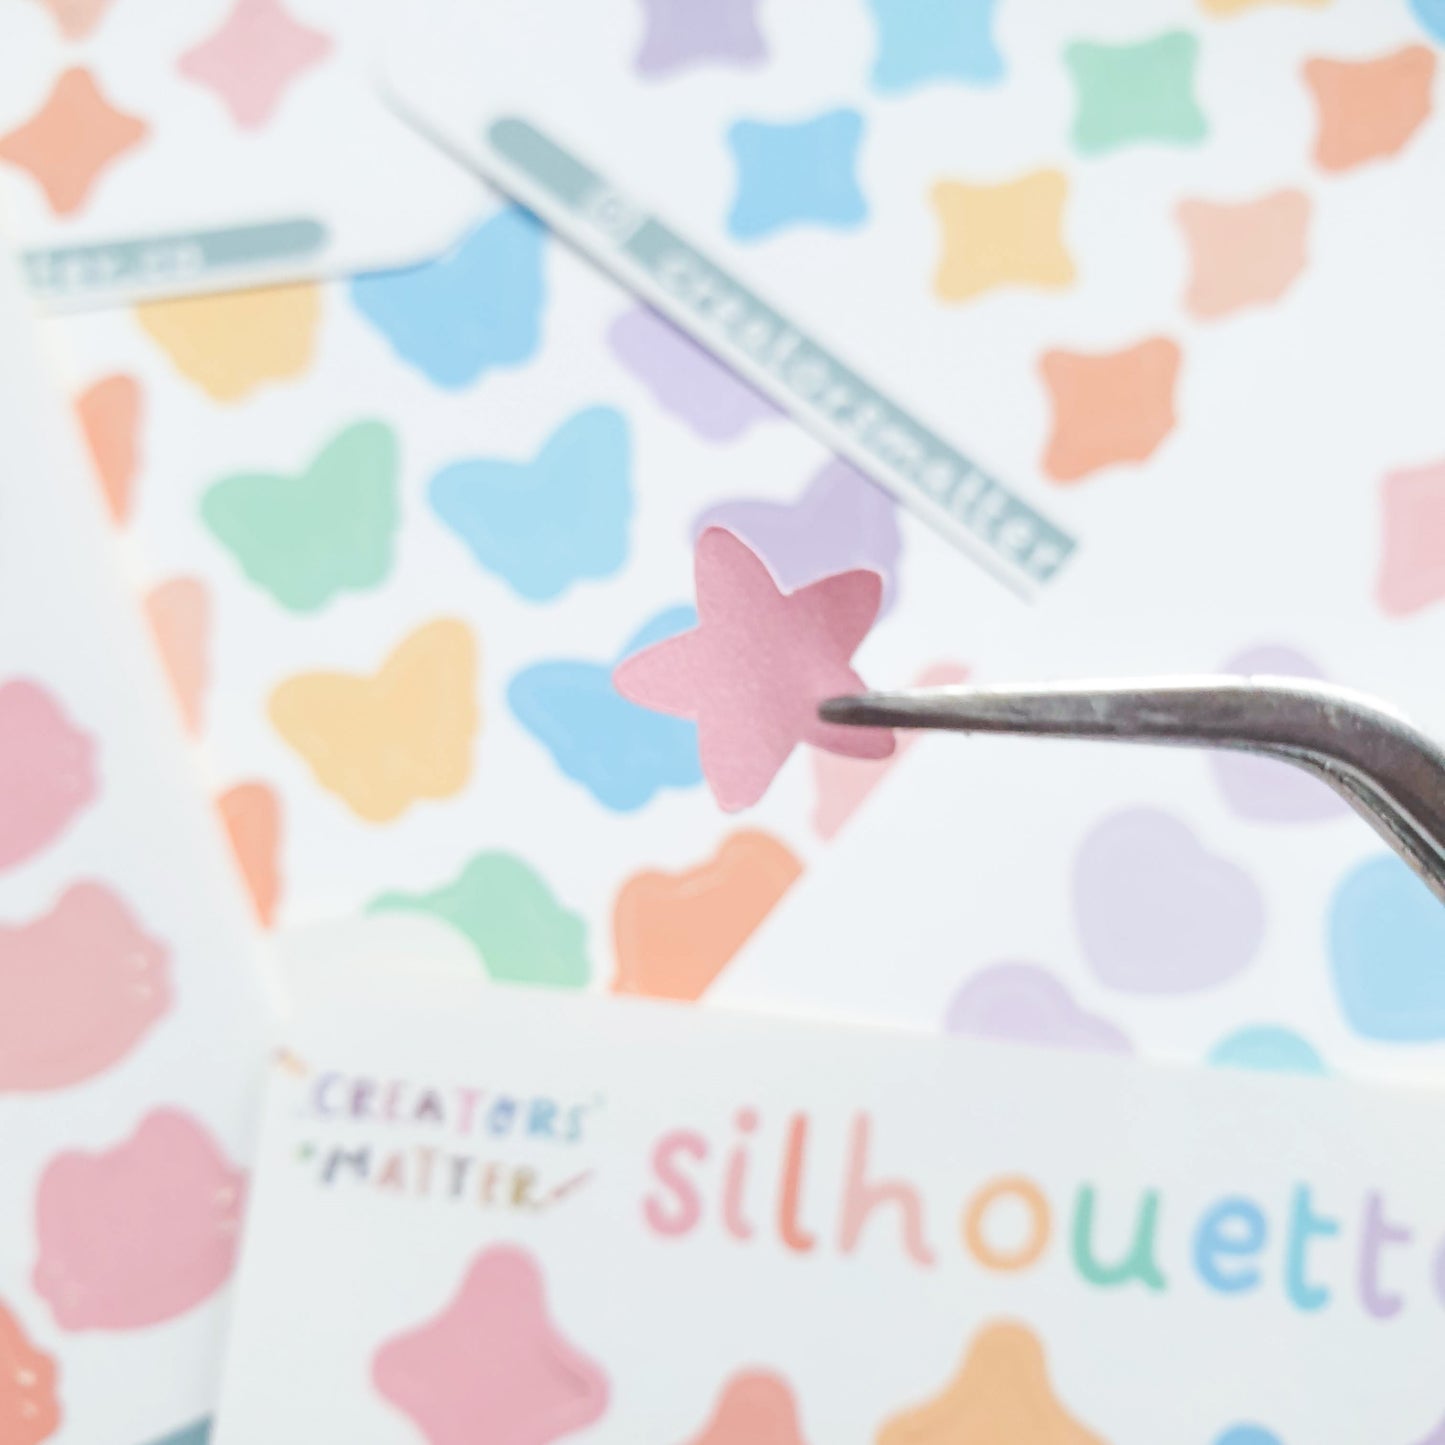 Silhouette (Flowers & Stars) Sticker Sheet